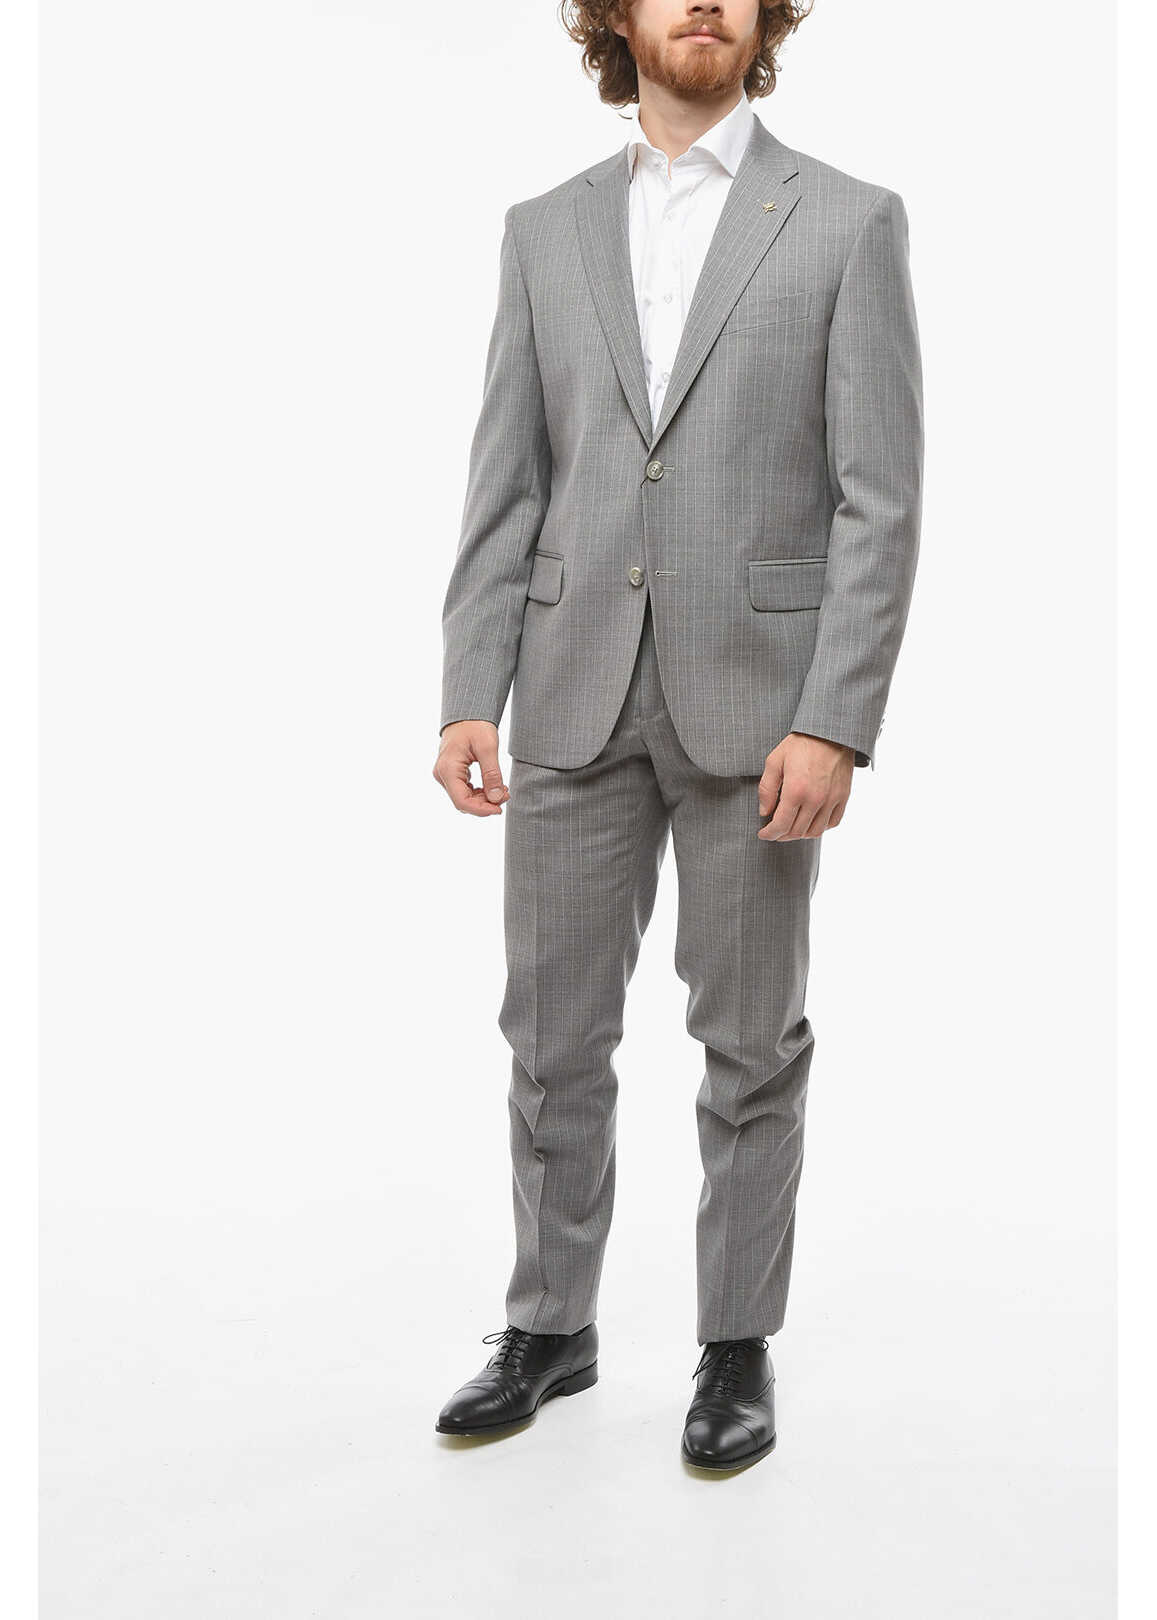 CORNELIANI Cc Collection Flap Pocket Right Pinstriped Suit Gray b-mall.ro